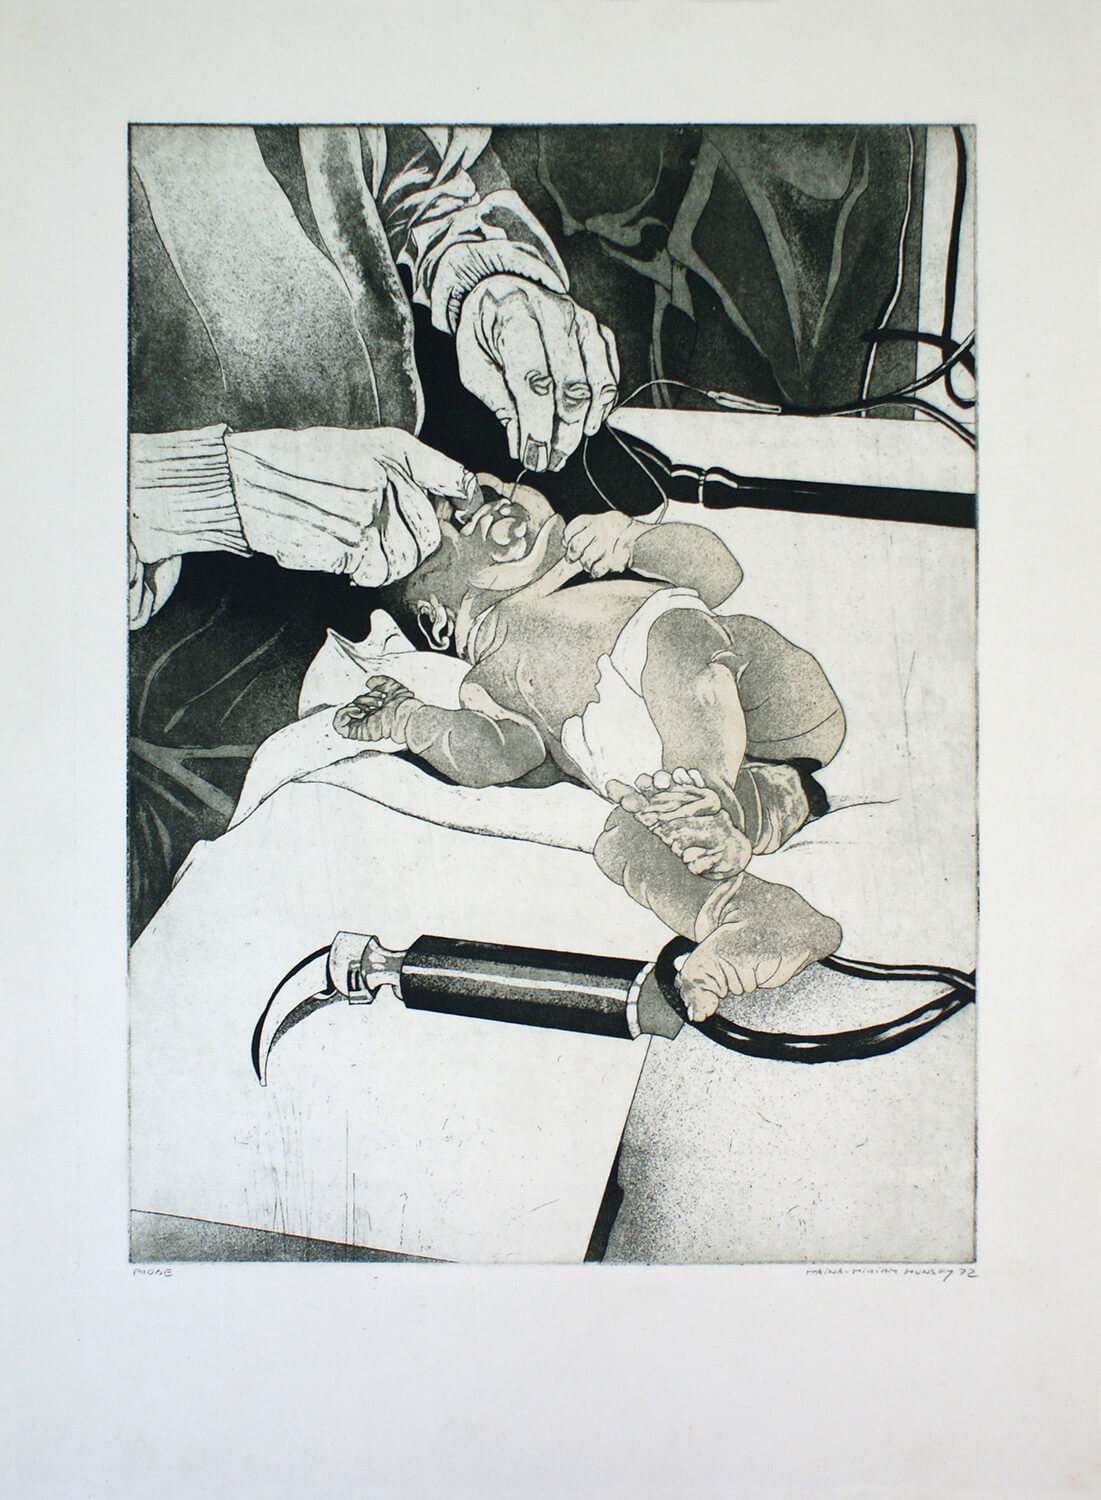 Maina-Miriam Munsky, Therapie, 1972, Farbradierung, Probe, Bild: 39,8 x 29,5 cm, Blatt: 52,5 x 38,5 cm